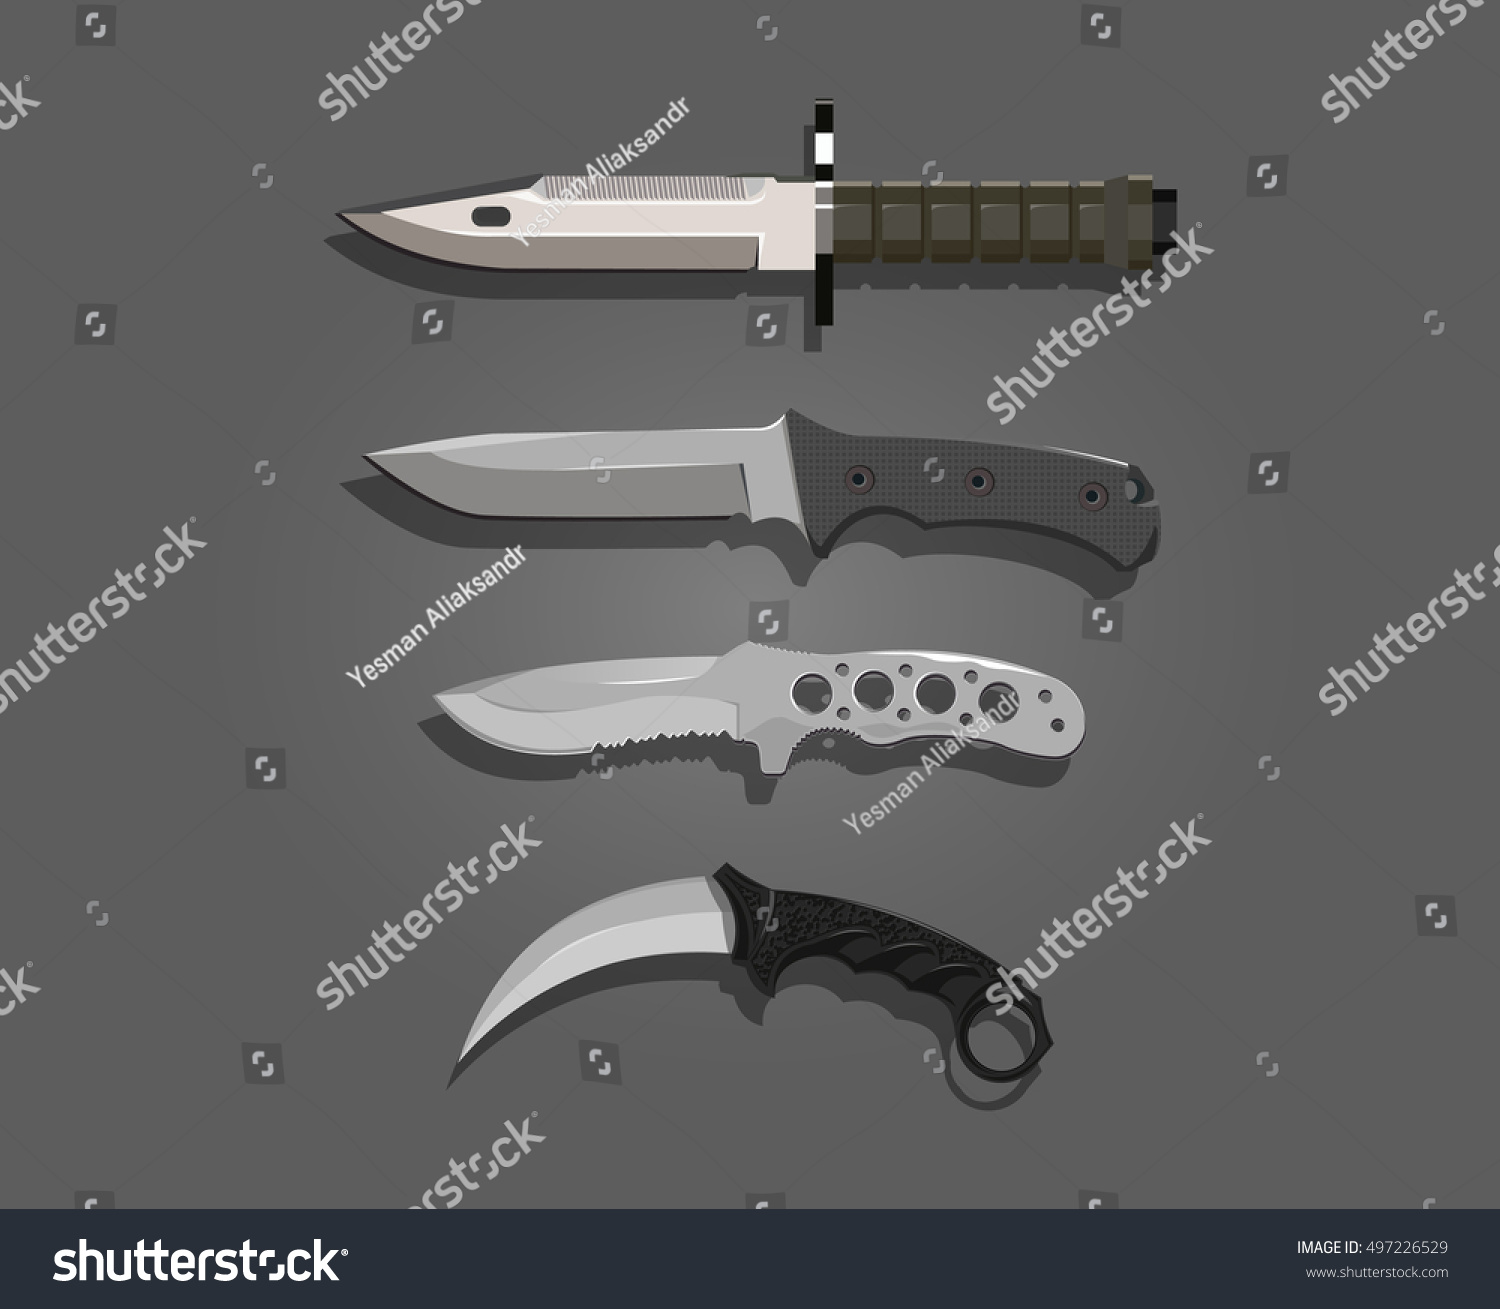 55 Boker knives Images, Stock Photos & Vectors | Shutterstock